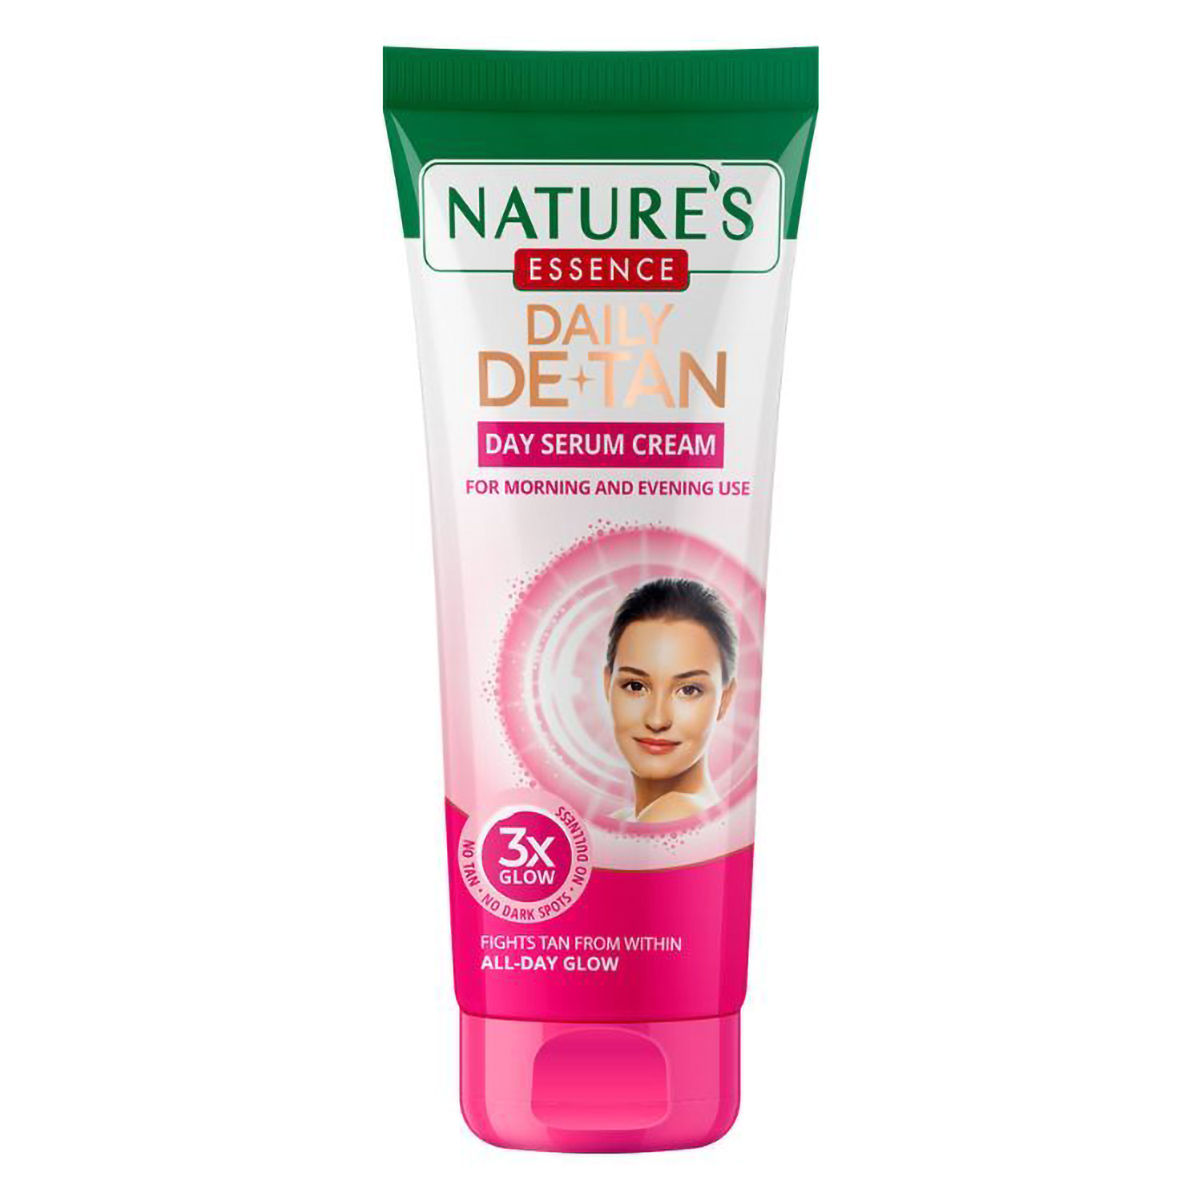 Buy Nature's Essence Daily DE+TAN Day Serum Cream, 50 ml Online